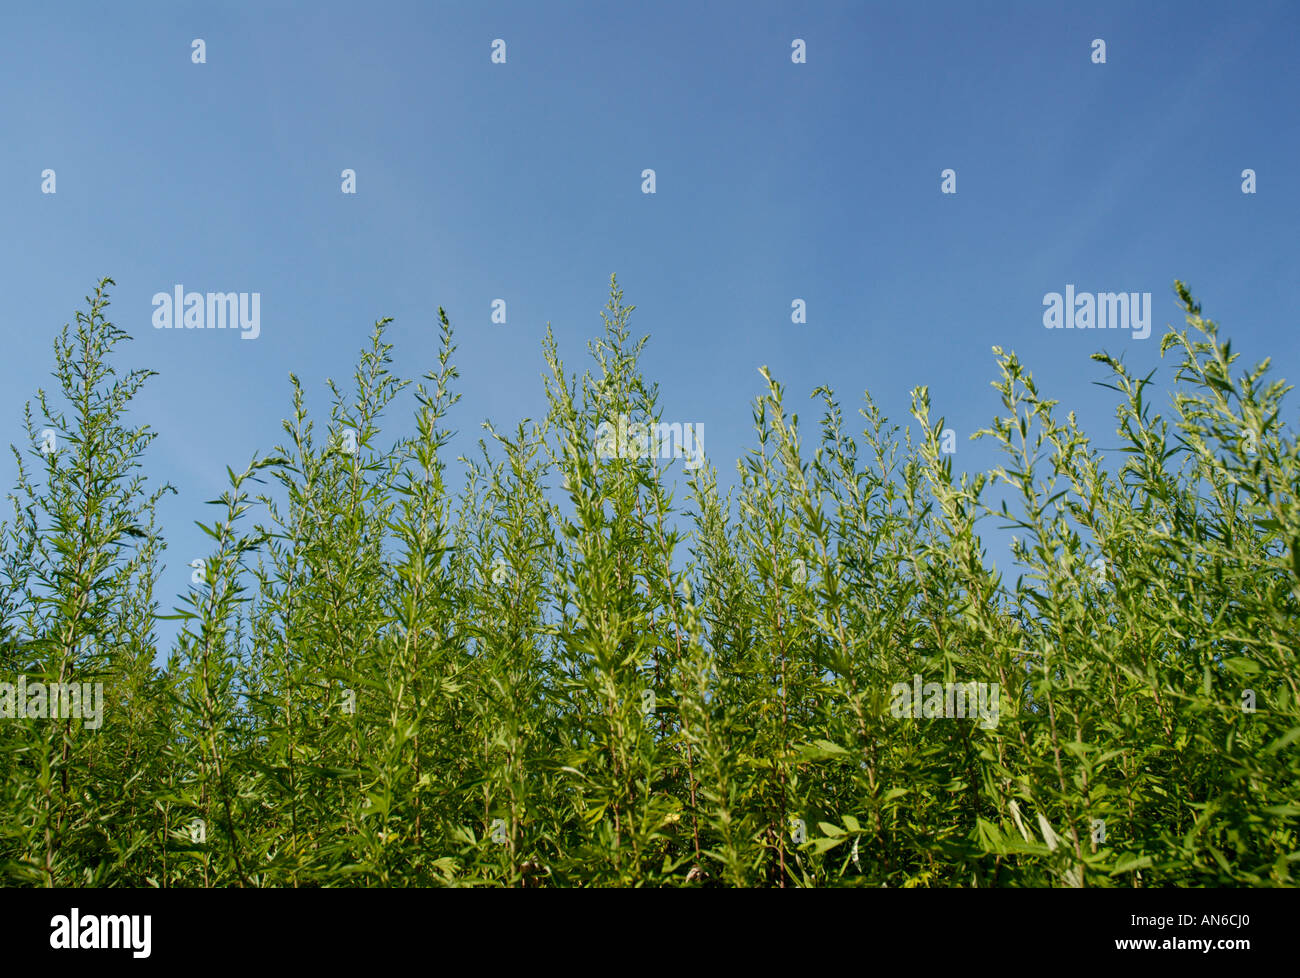 Common ragweed, Ambrosia artemisiifolia, plants against blue sky Stock Photo